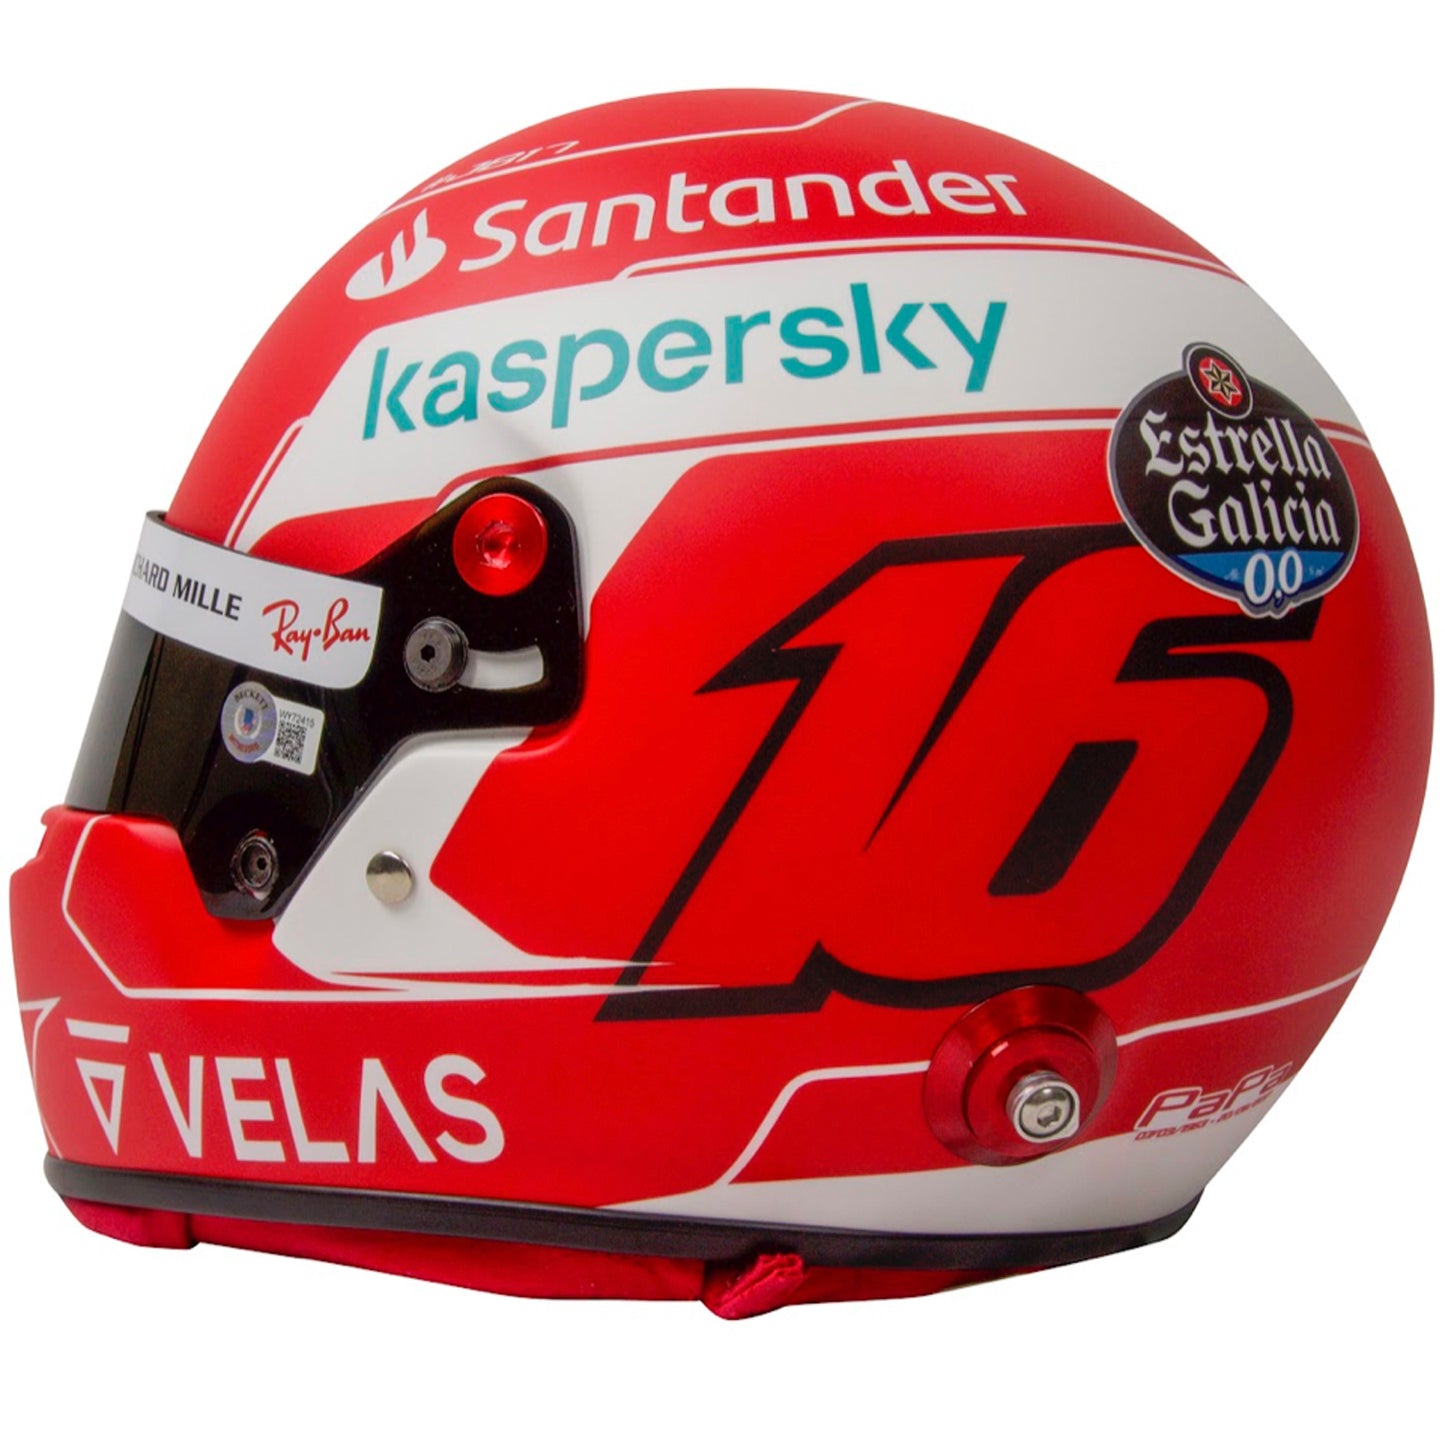 Charles Leclerc Autographed F1 Mini Ferrari Helmet - BAS